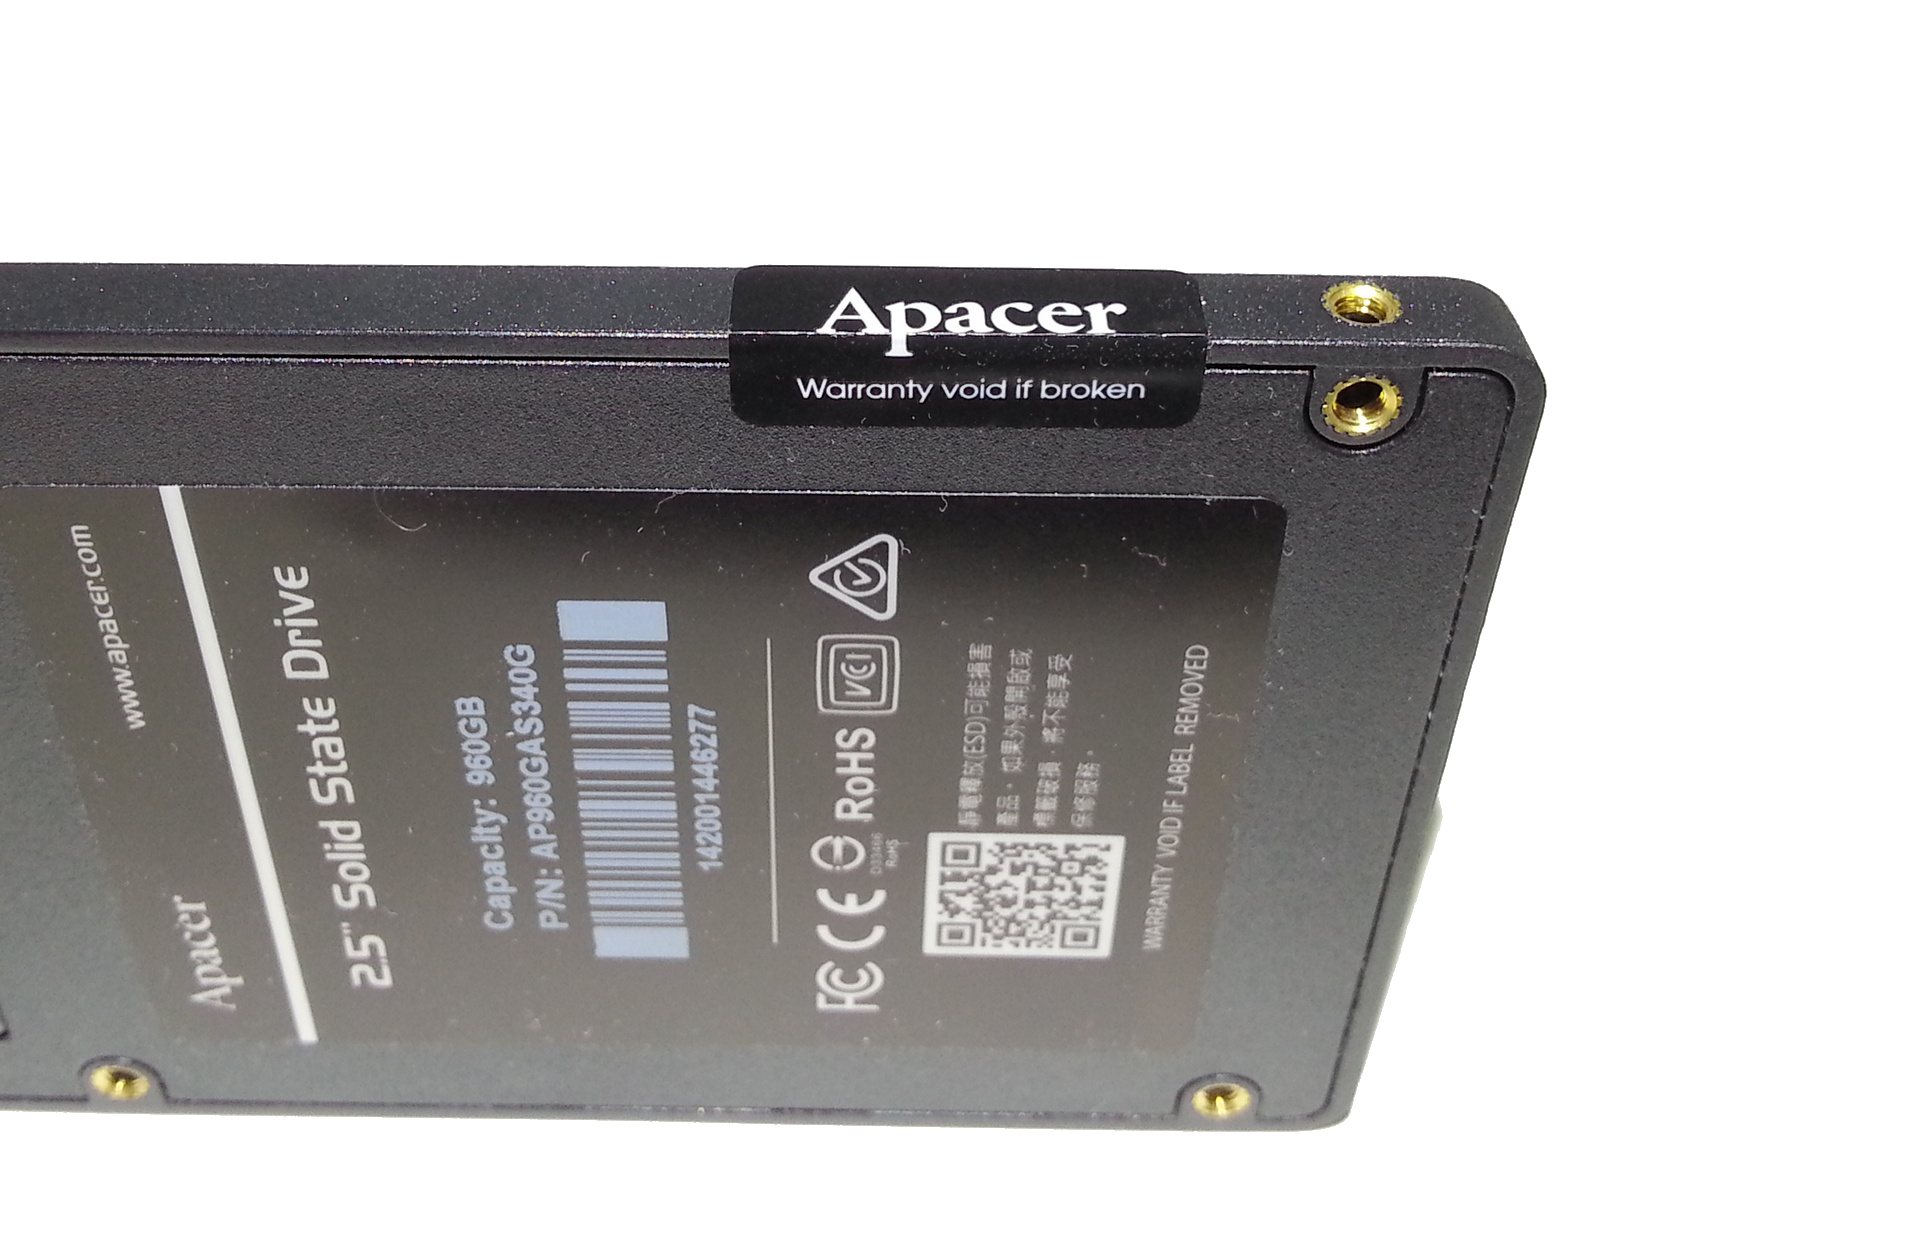 Ssd накопитель panther. Ссд диск Panther 512. SSD 512gb Apacer Panther перемычка. Разобрать SSD Apacer.